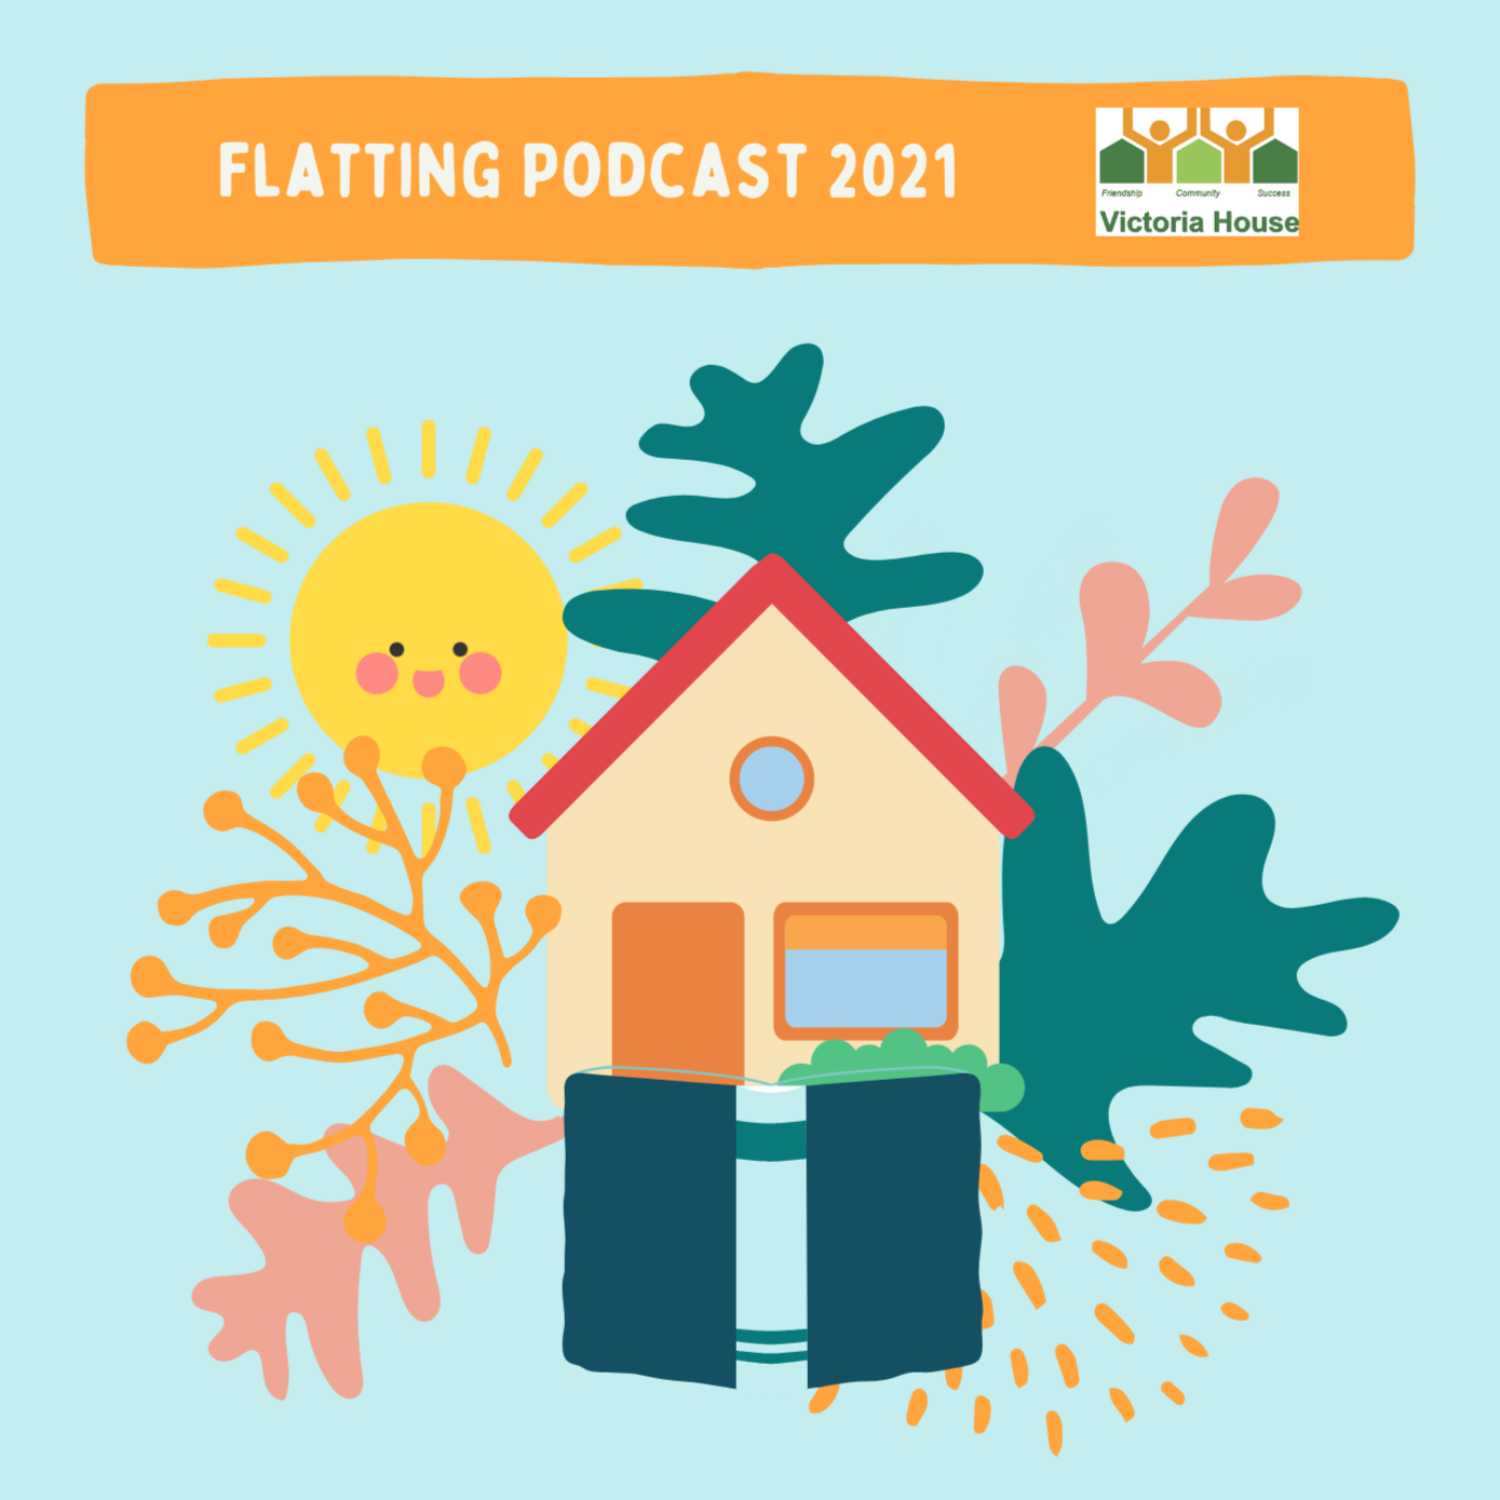 Flatting Podcast 2021